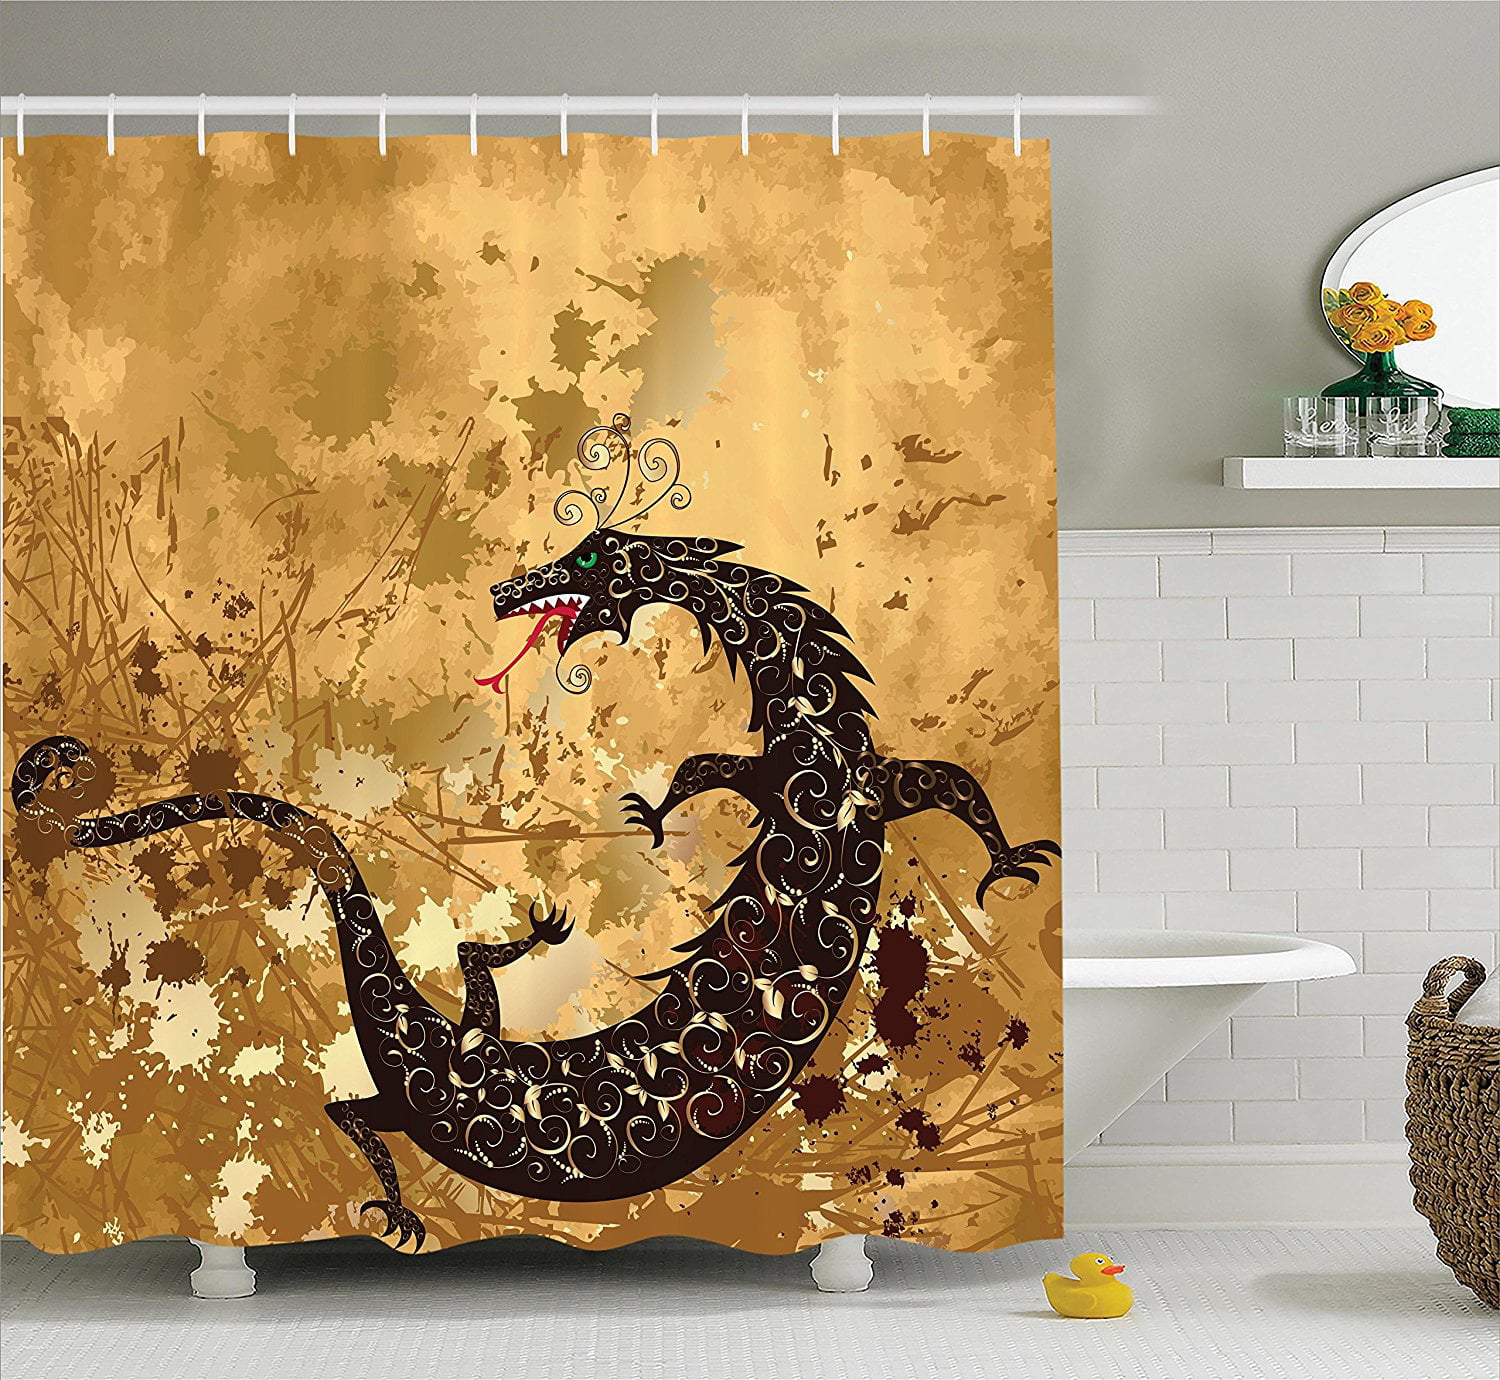 The Dragon Theme Waterproof Fabric Home Decor Shower Curtain Bathroom Mat 